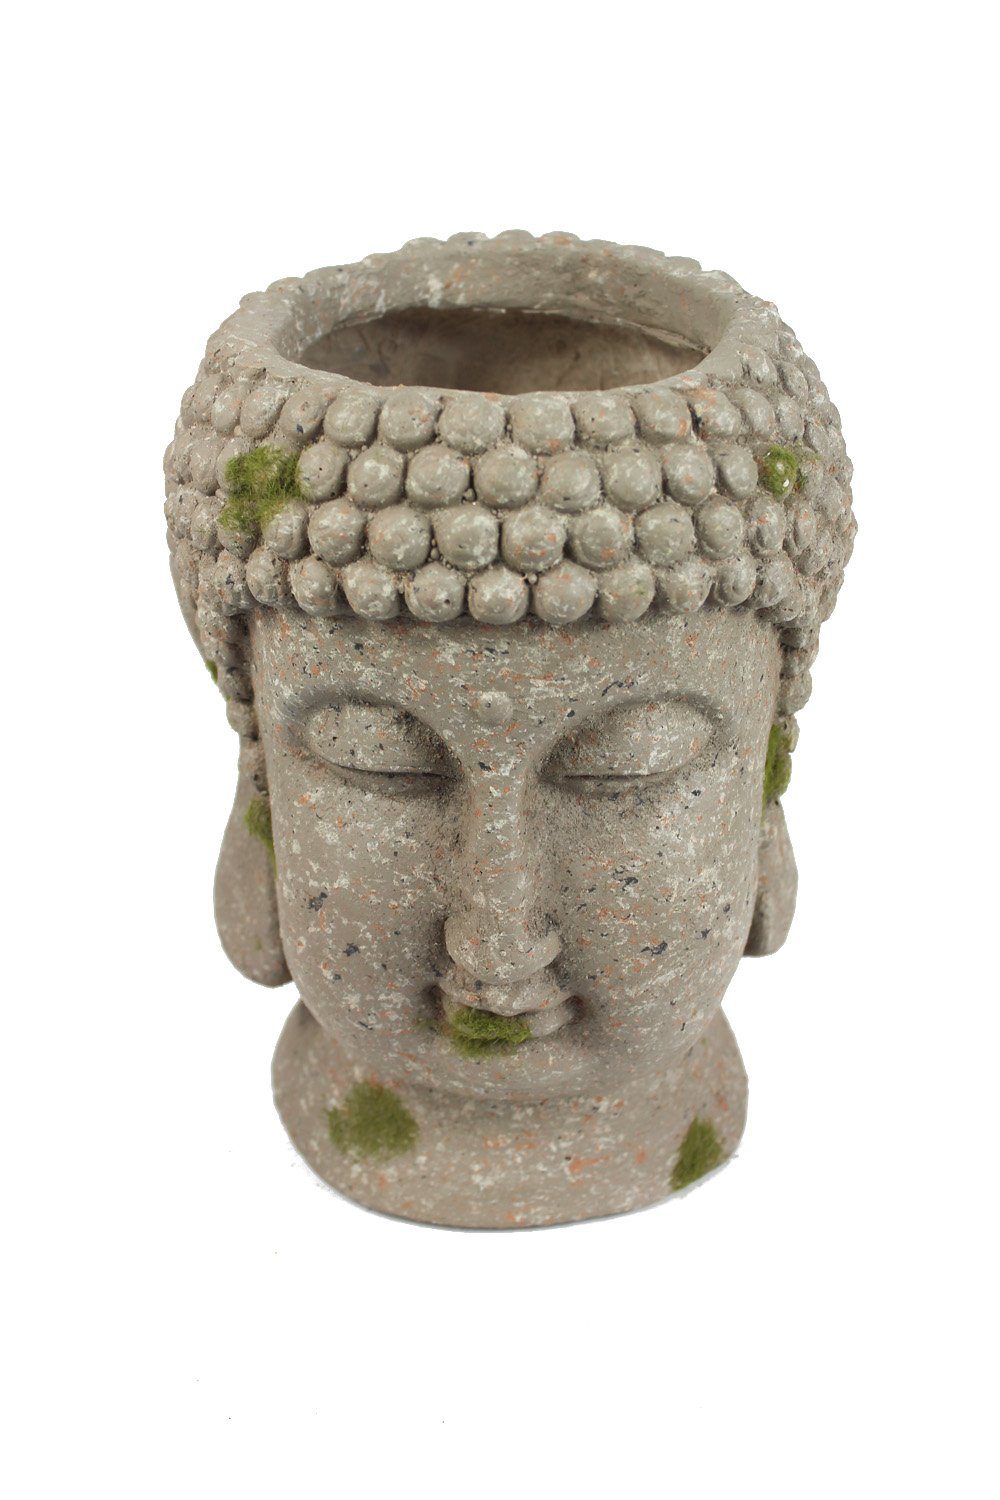 Kopf bepflanzbar Blumentopf Pflanztopf, Gartenfigur Skulptur Buddha Gartendekoration Büste Shiva Arnusa